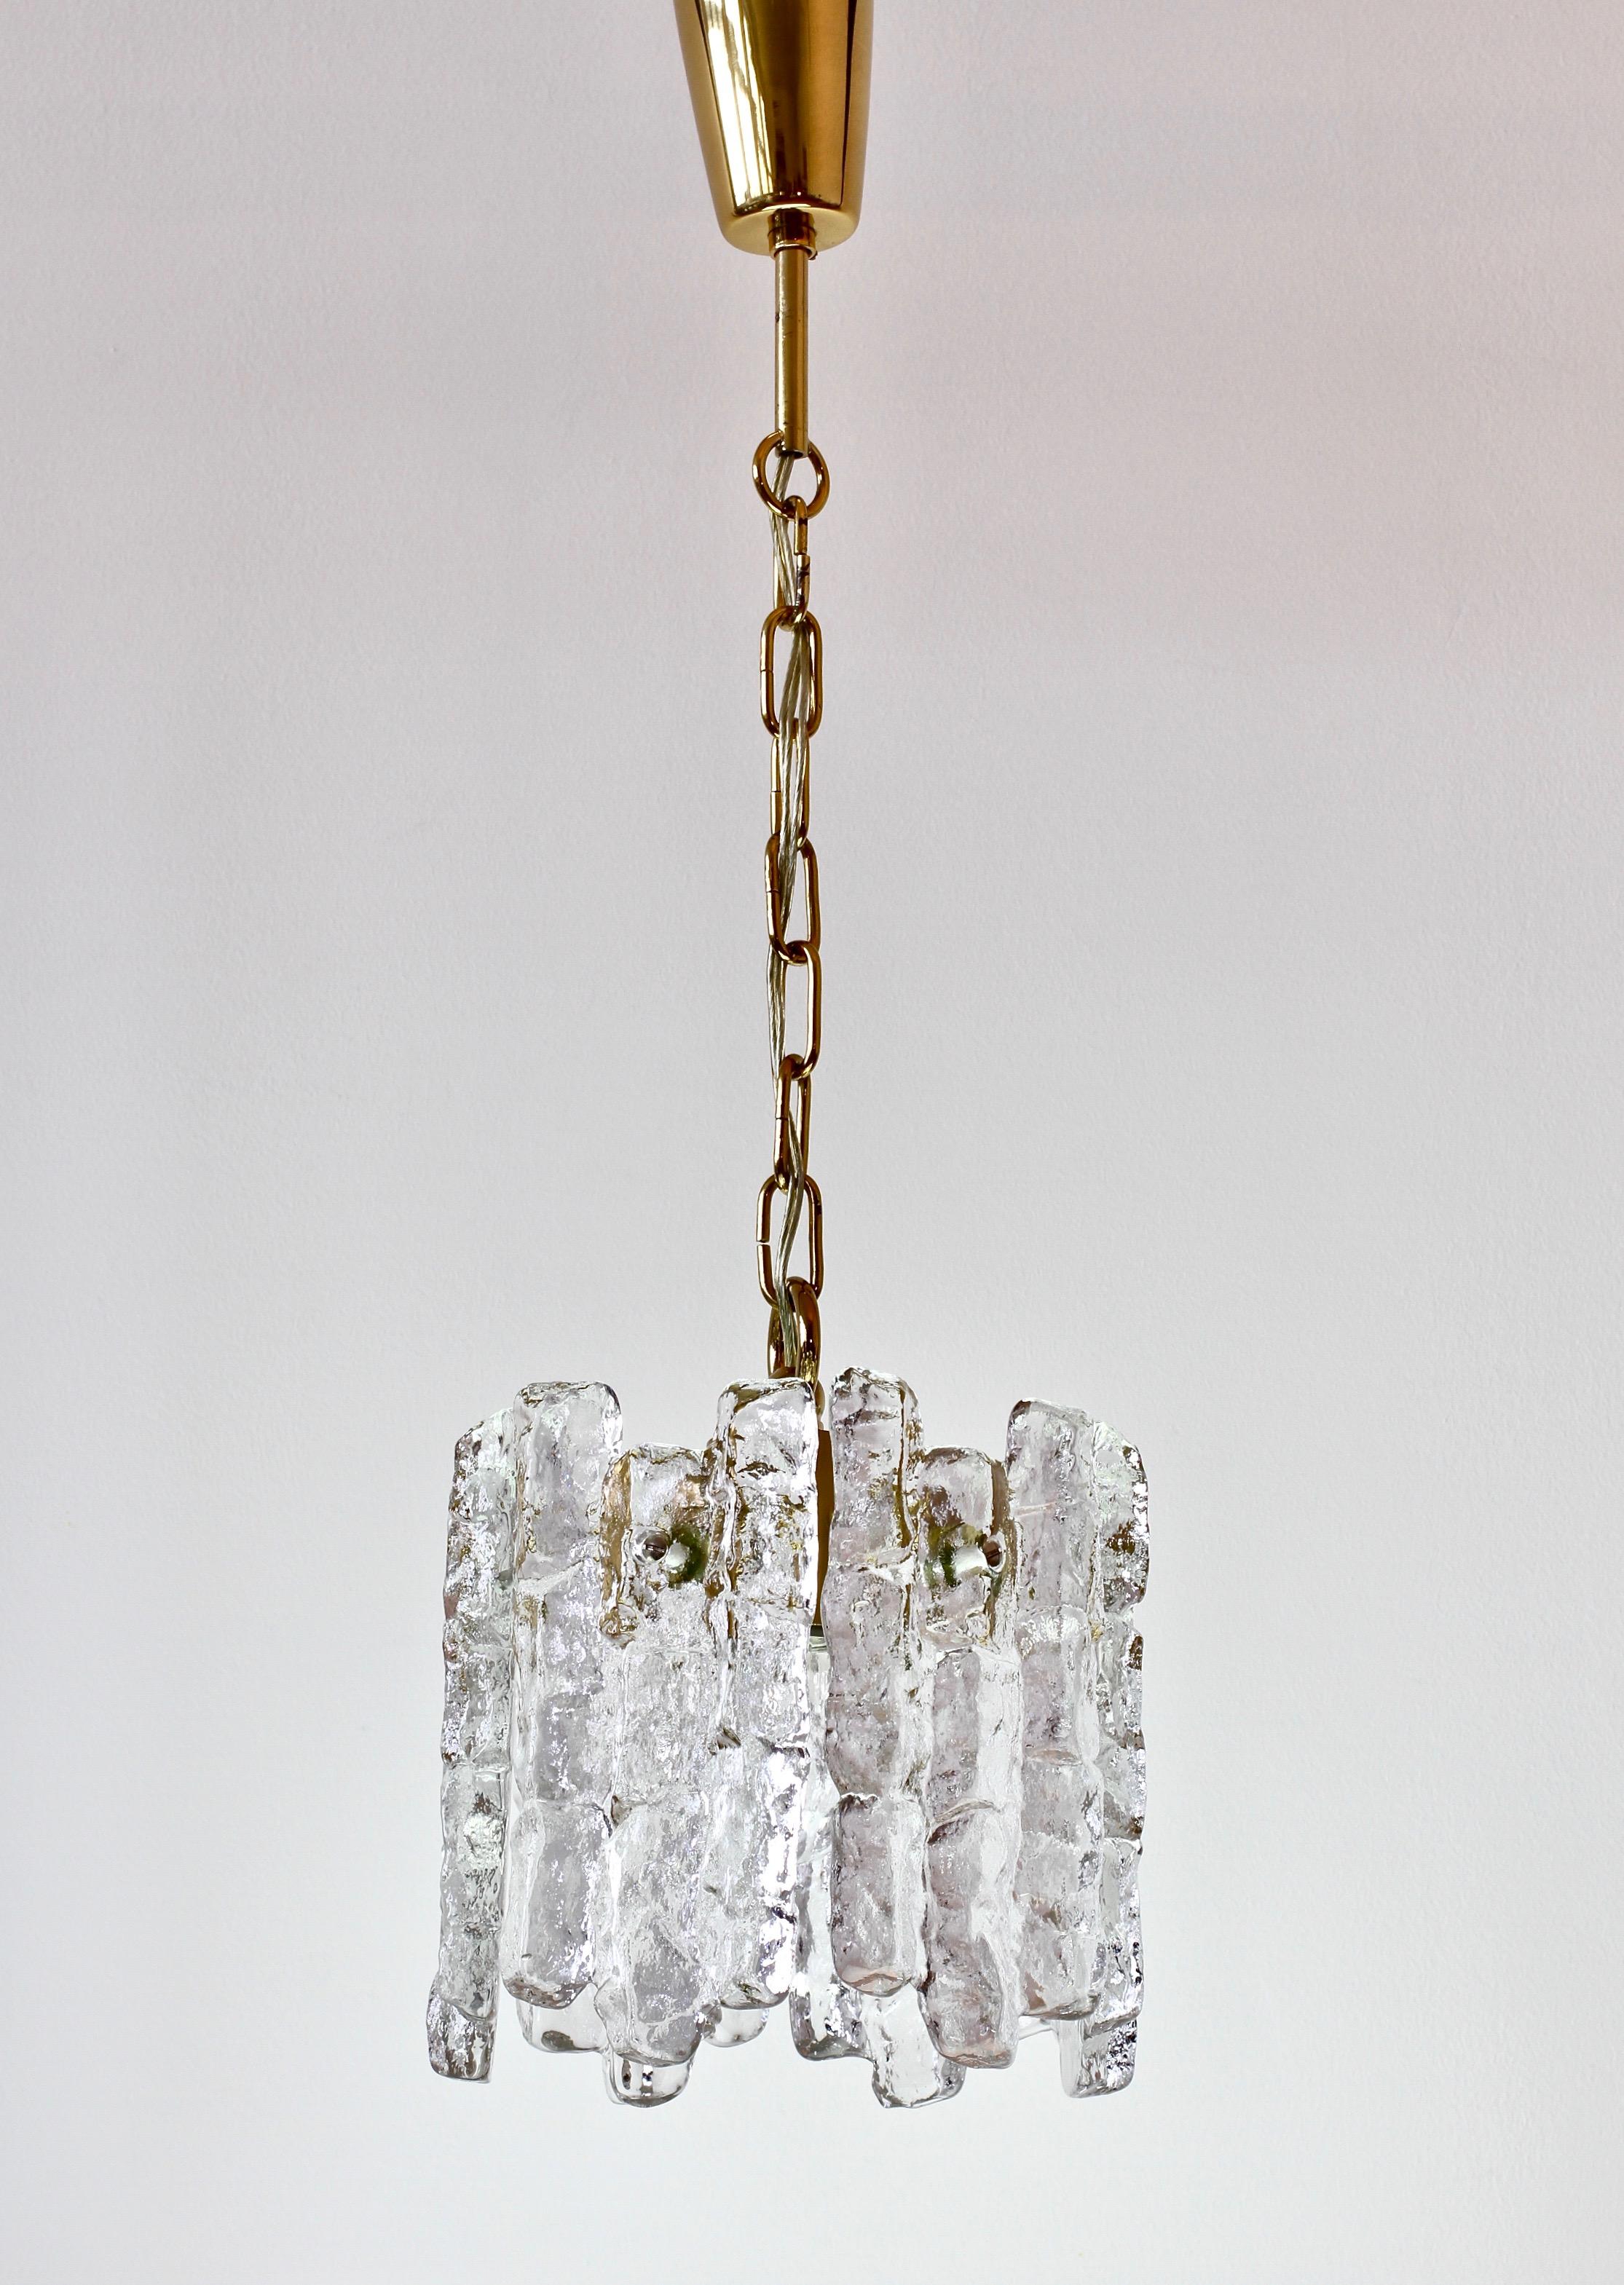 Austrian Mid-Century Kalmar Ice Crystal Glass and Brass Pendant Light or Chandelier 1960s For Sale